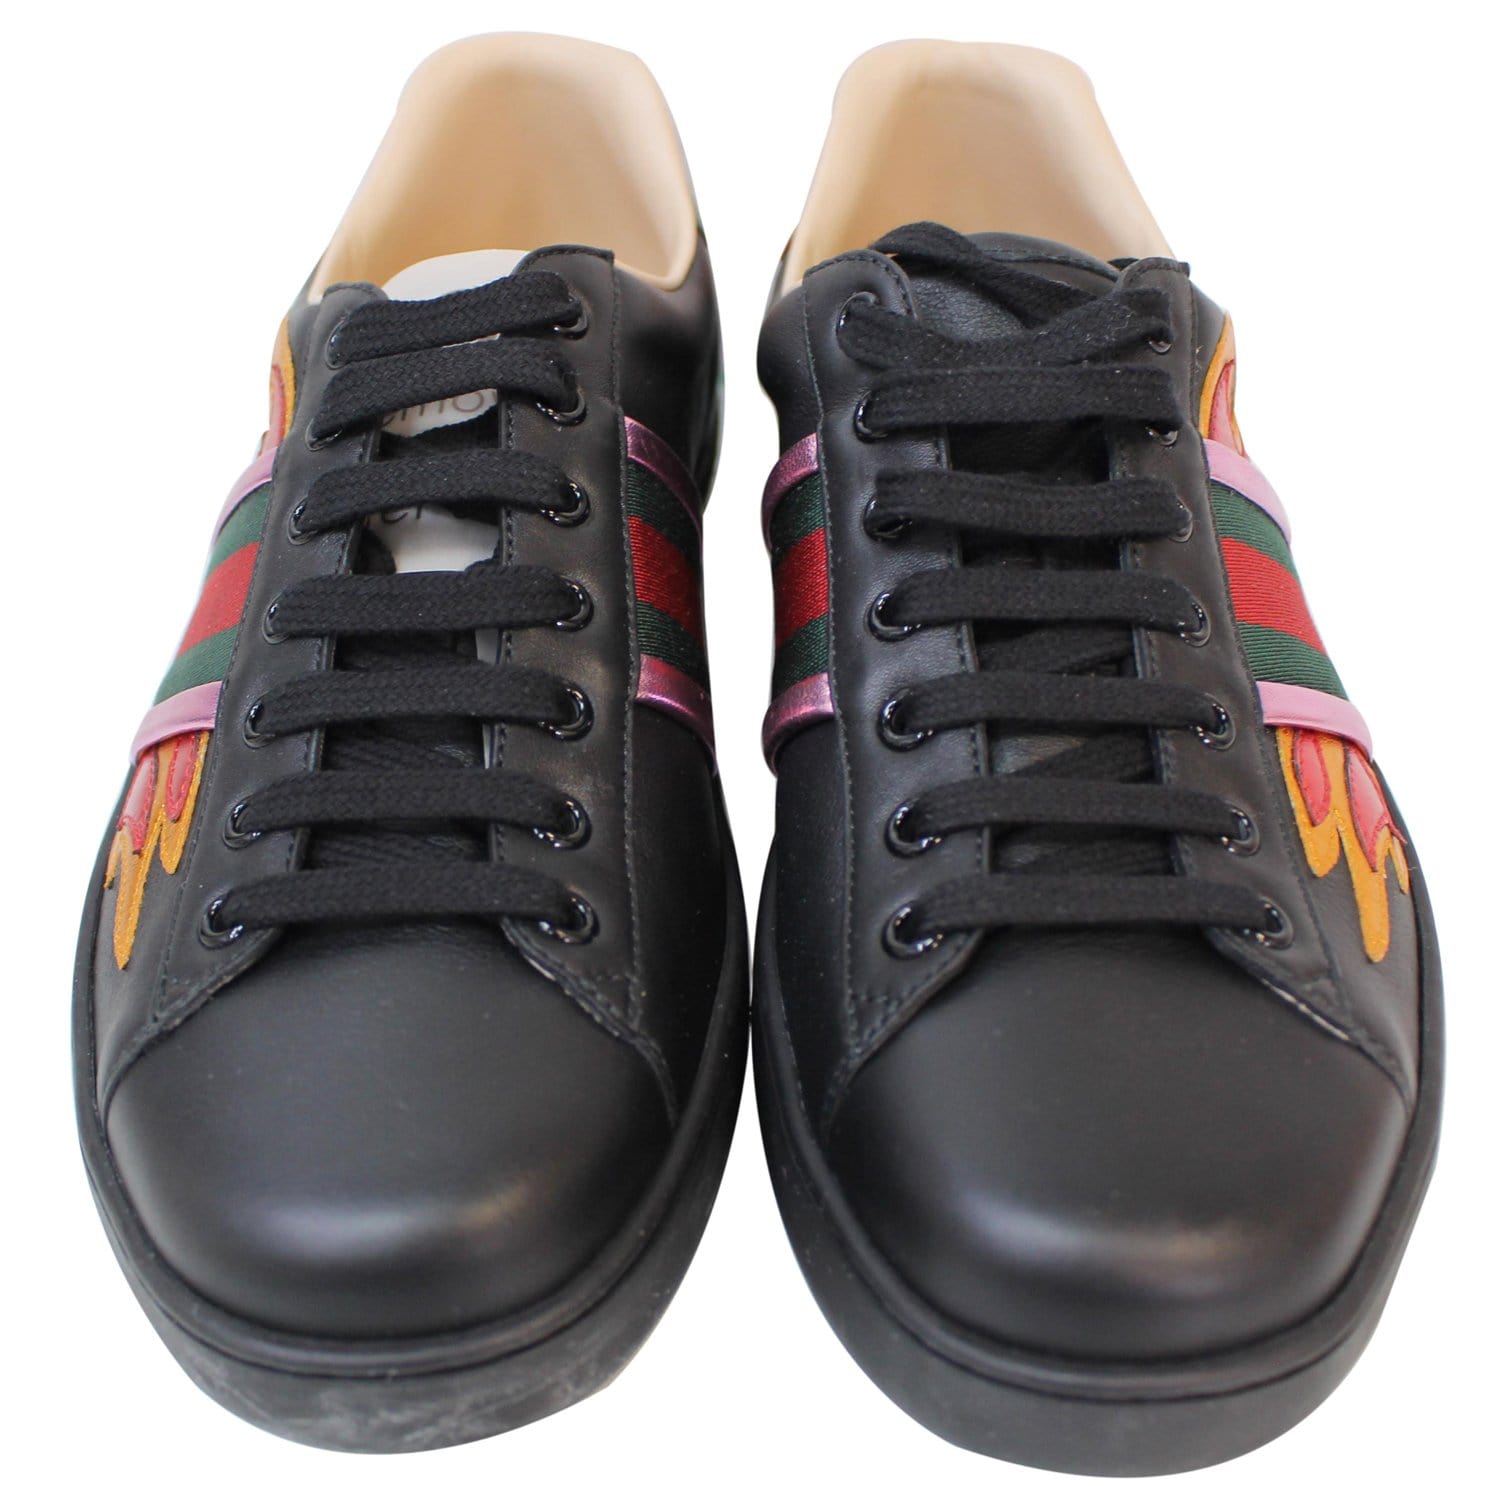 GUCCI Ace Low-Top Flames Sneaker Black 440724 US 7.5